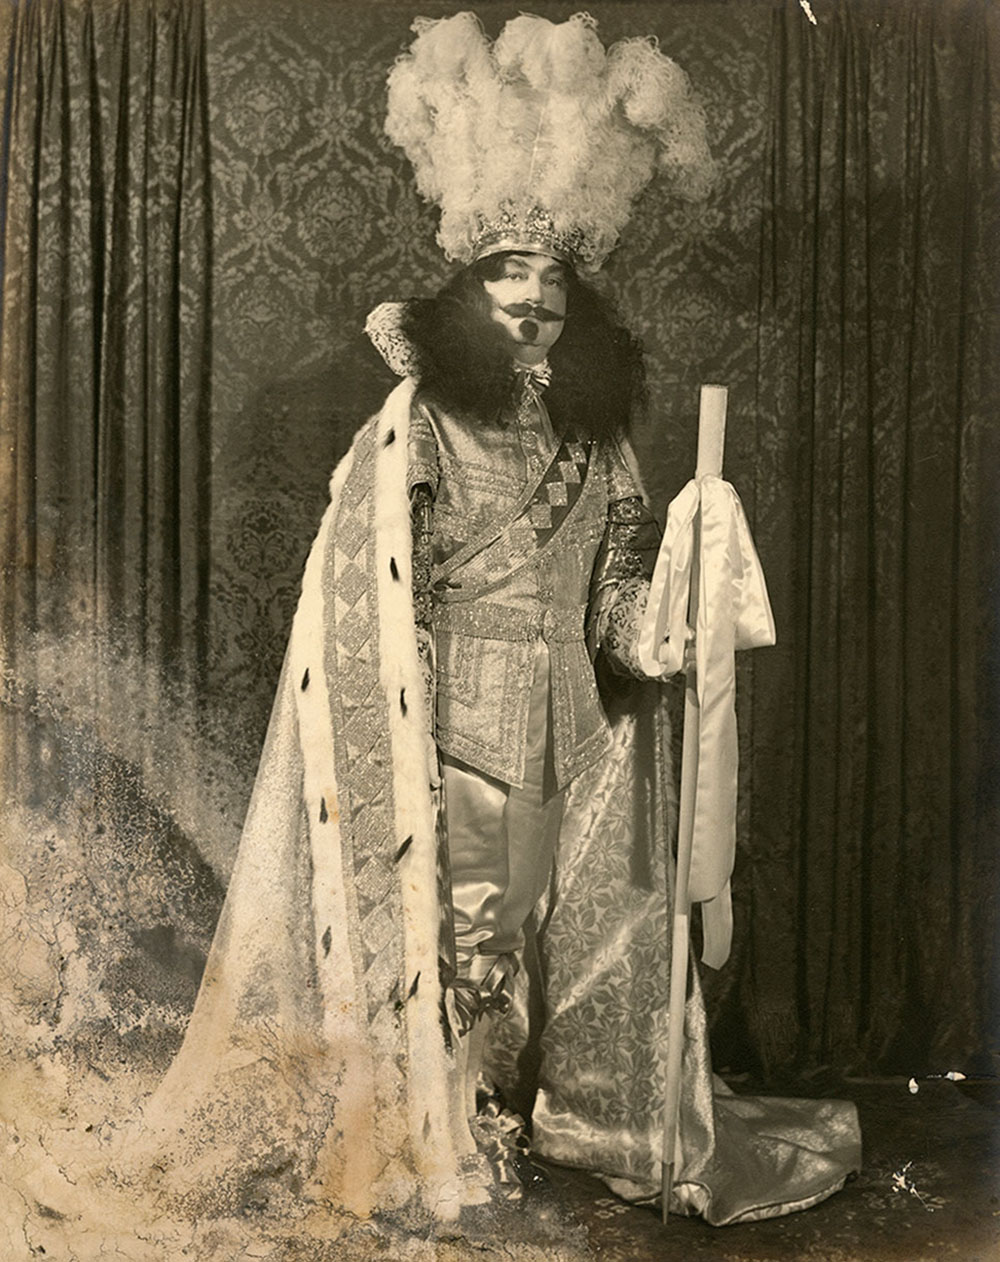 Unidentified Carnival King, Gelatin-Silver, date unknown